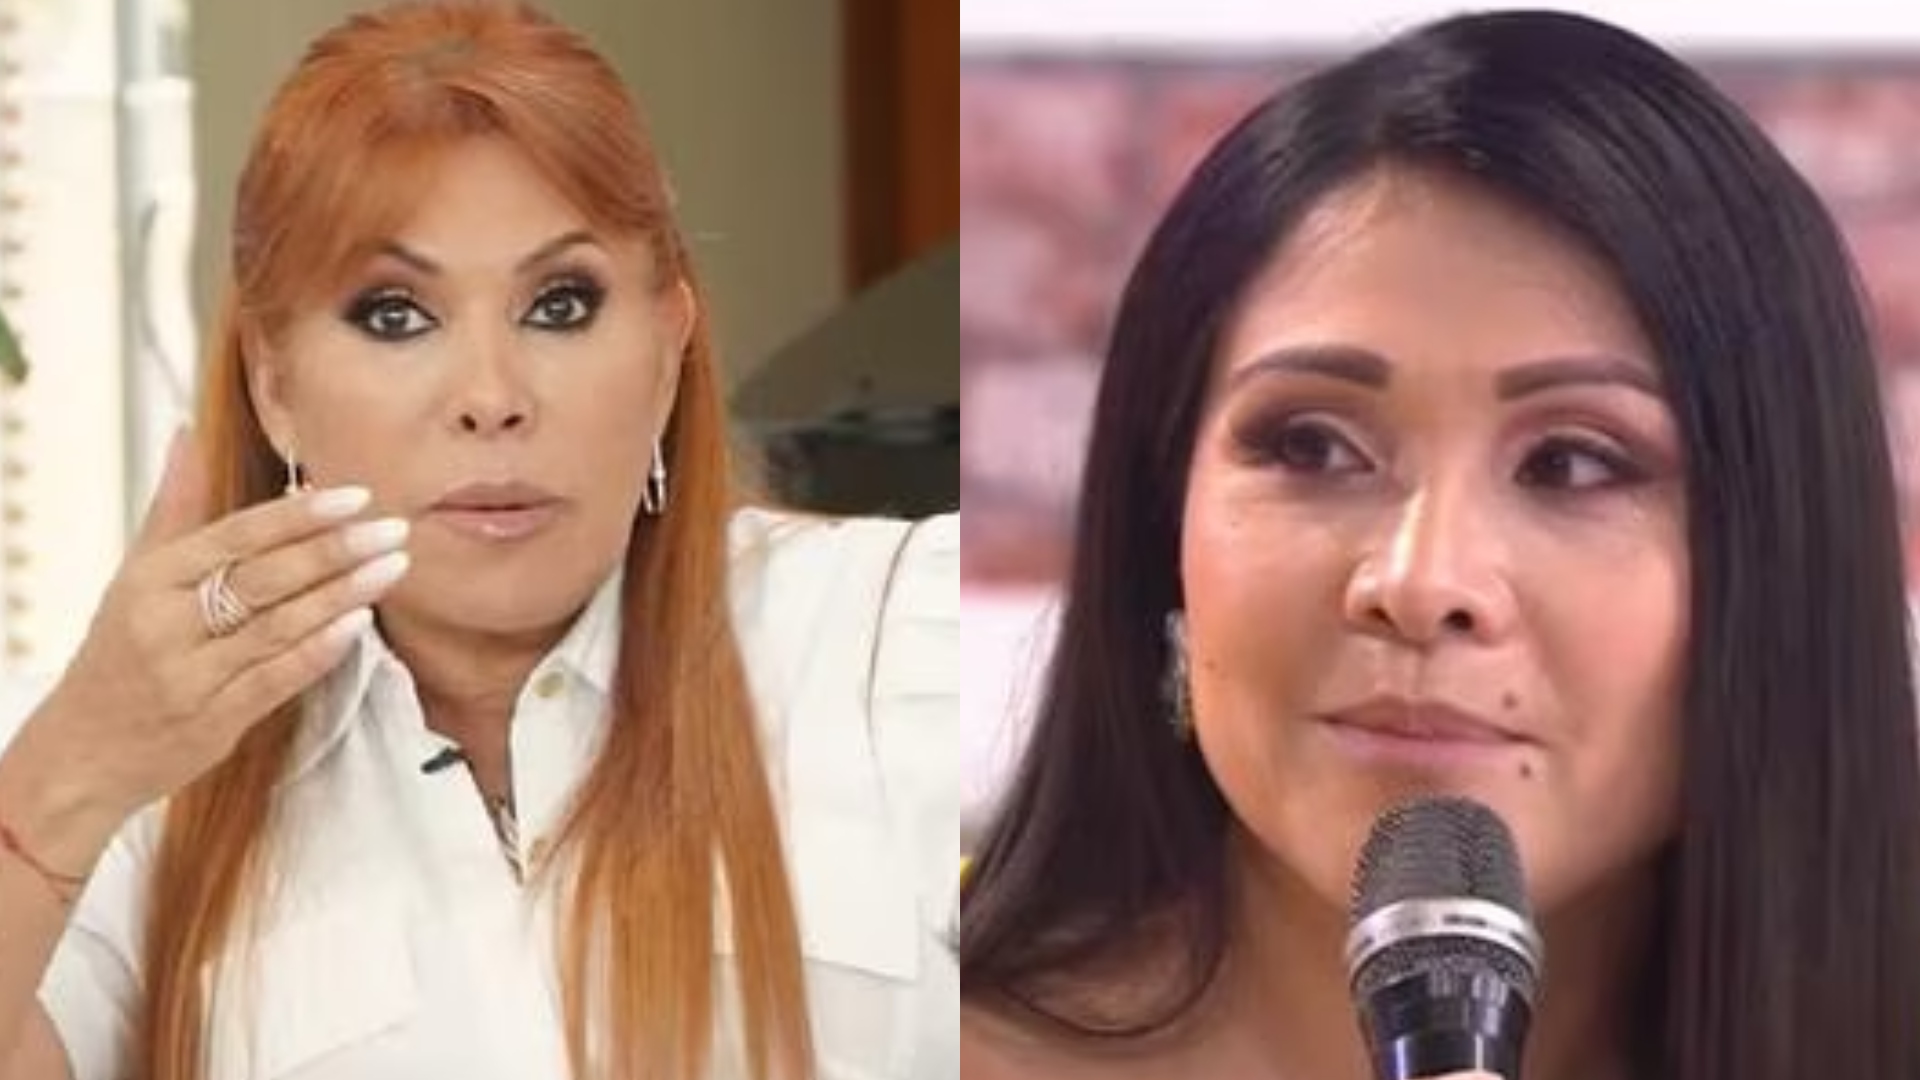 Magaly Medina arremetió contra ‘Mande quien Mande’ por desatinada broma a Tula Rodríguez: “Merece respeto”